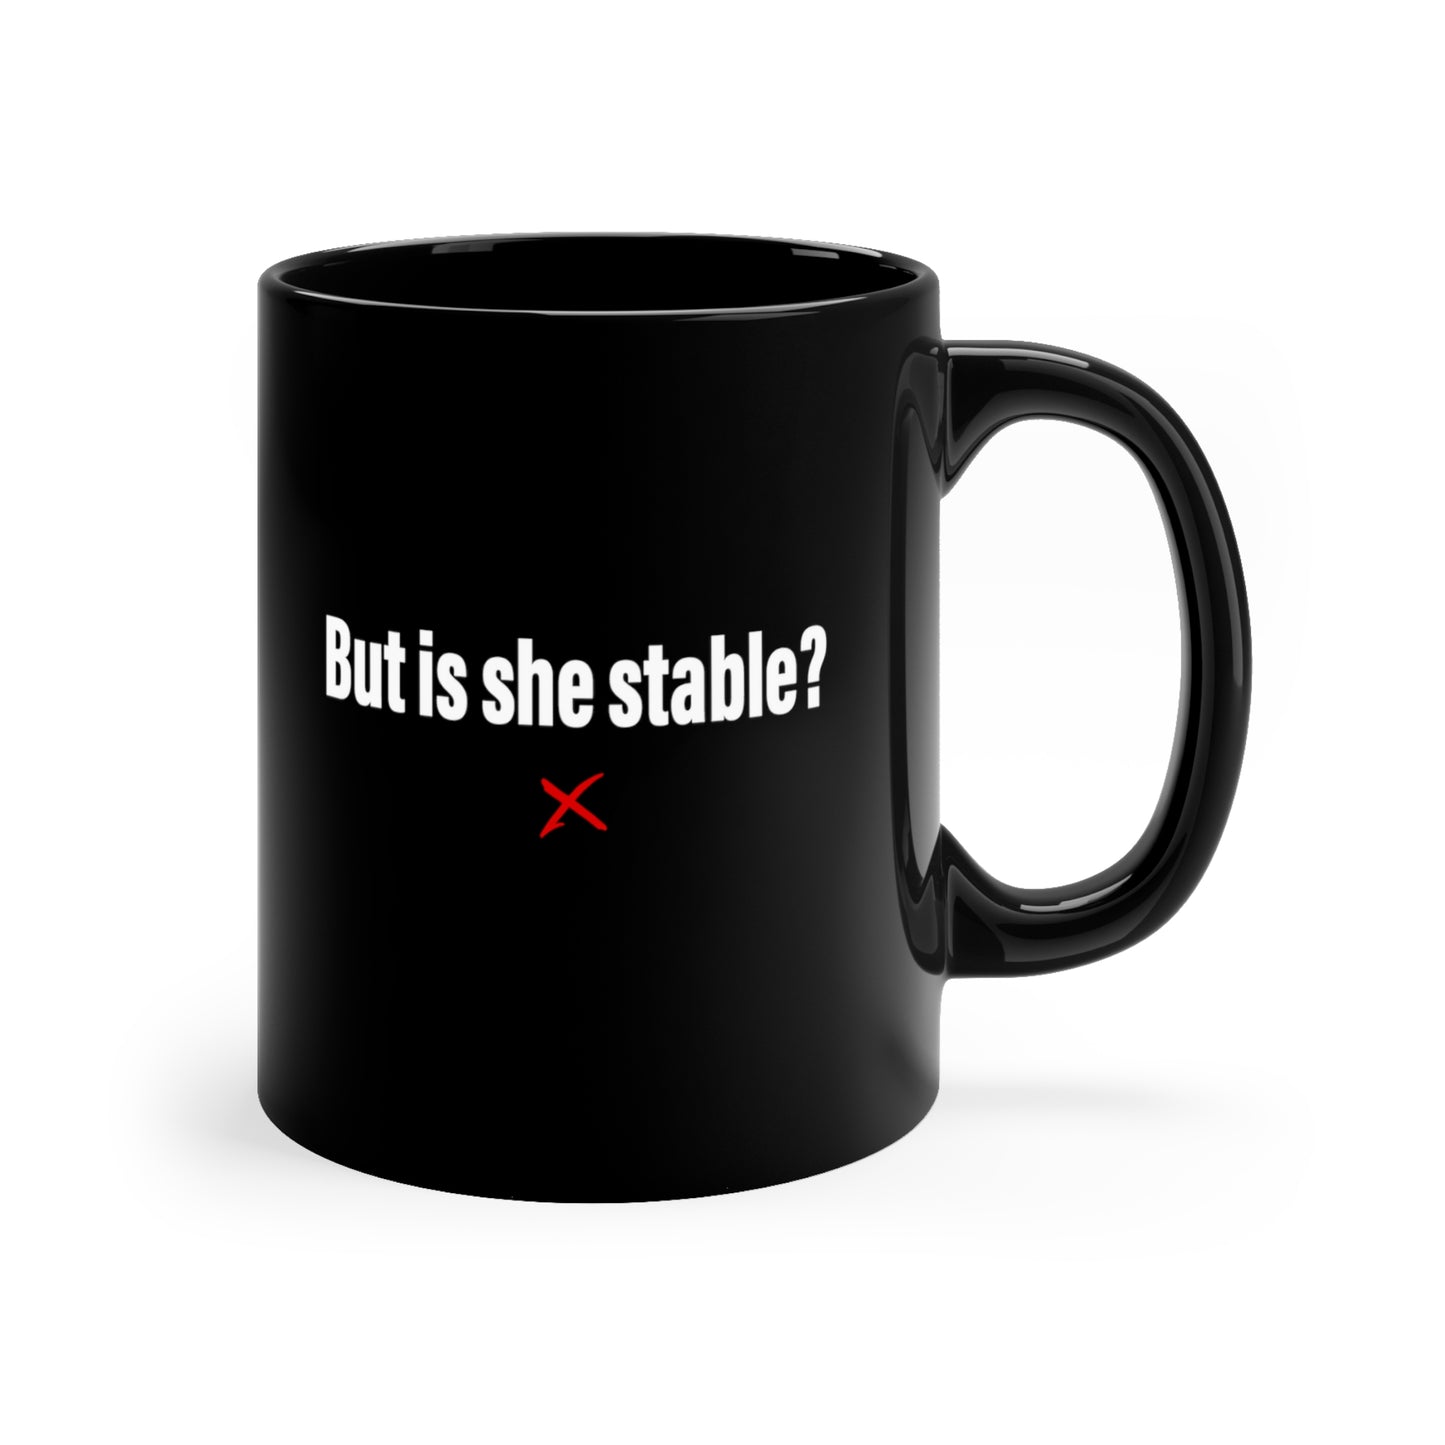 But is she stable? - Mug